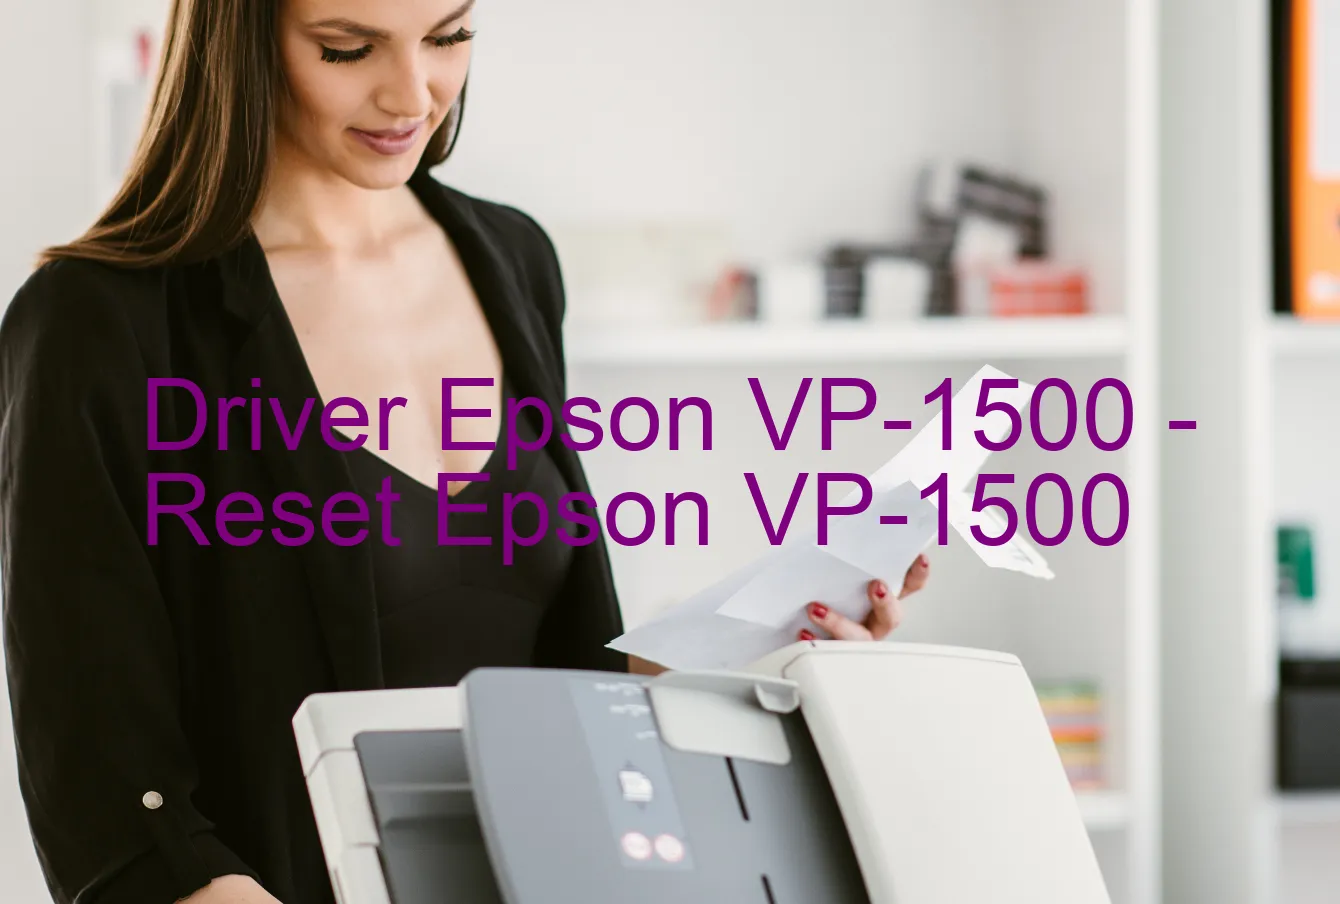 Epson VP-1500のドライバー、Epson VP-1500のリセットソフトウェア